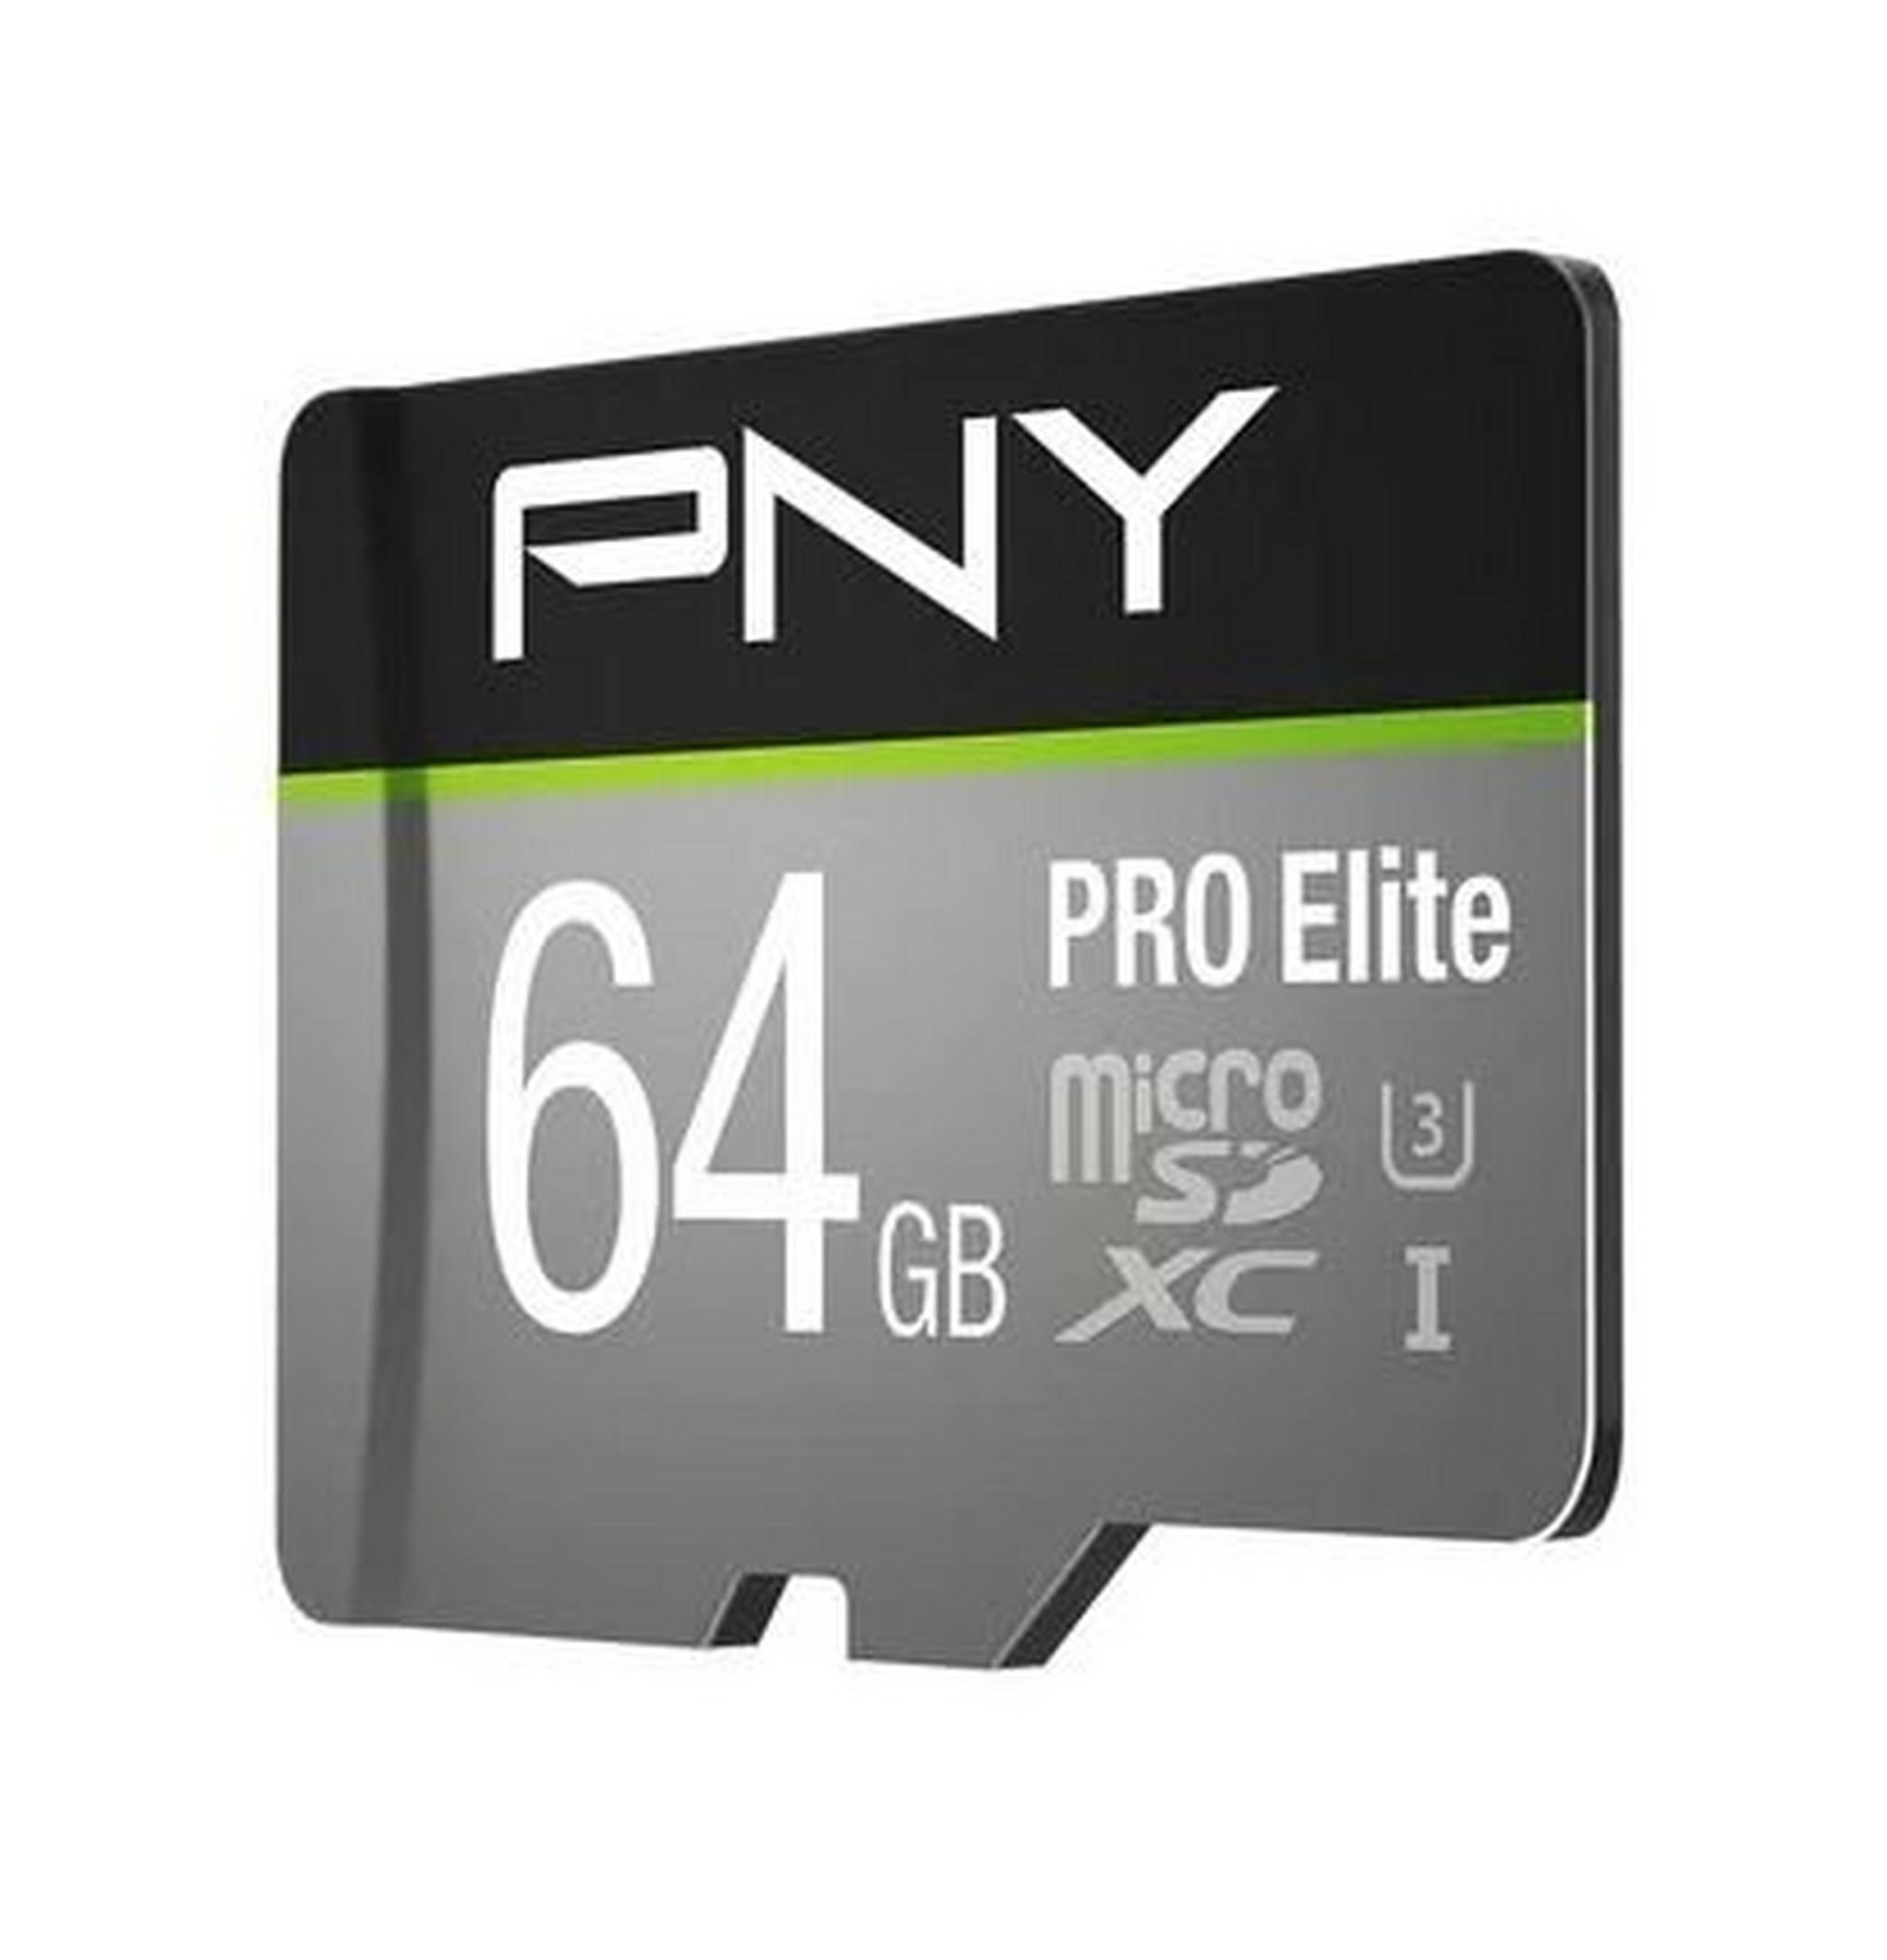 PNY PRO Elite MicroSD Card 64GB